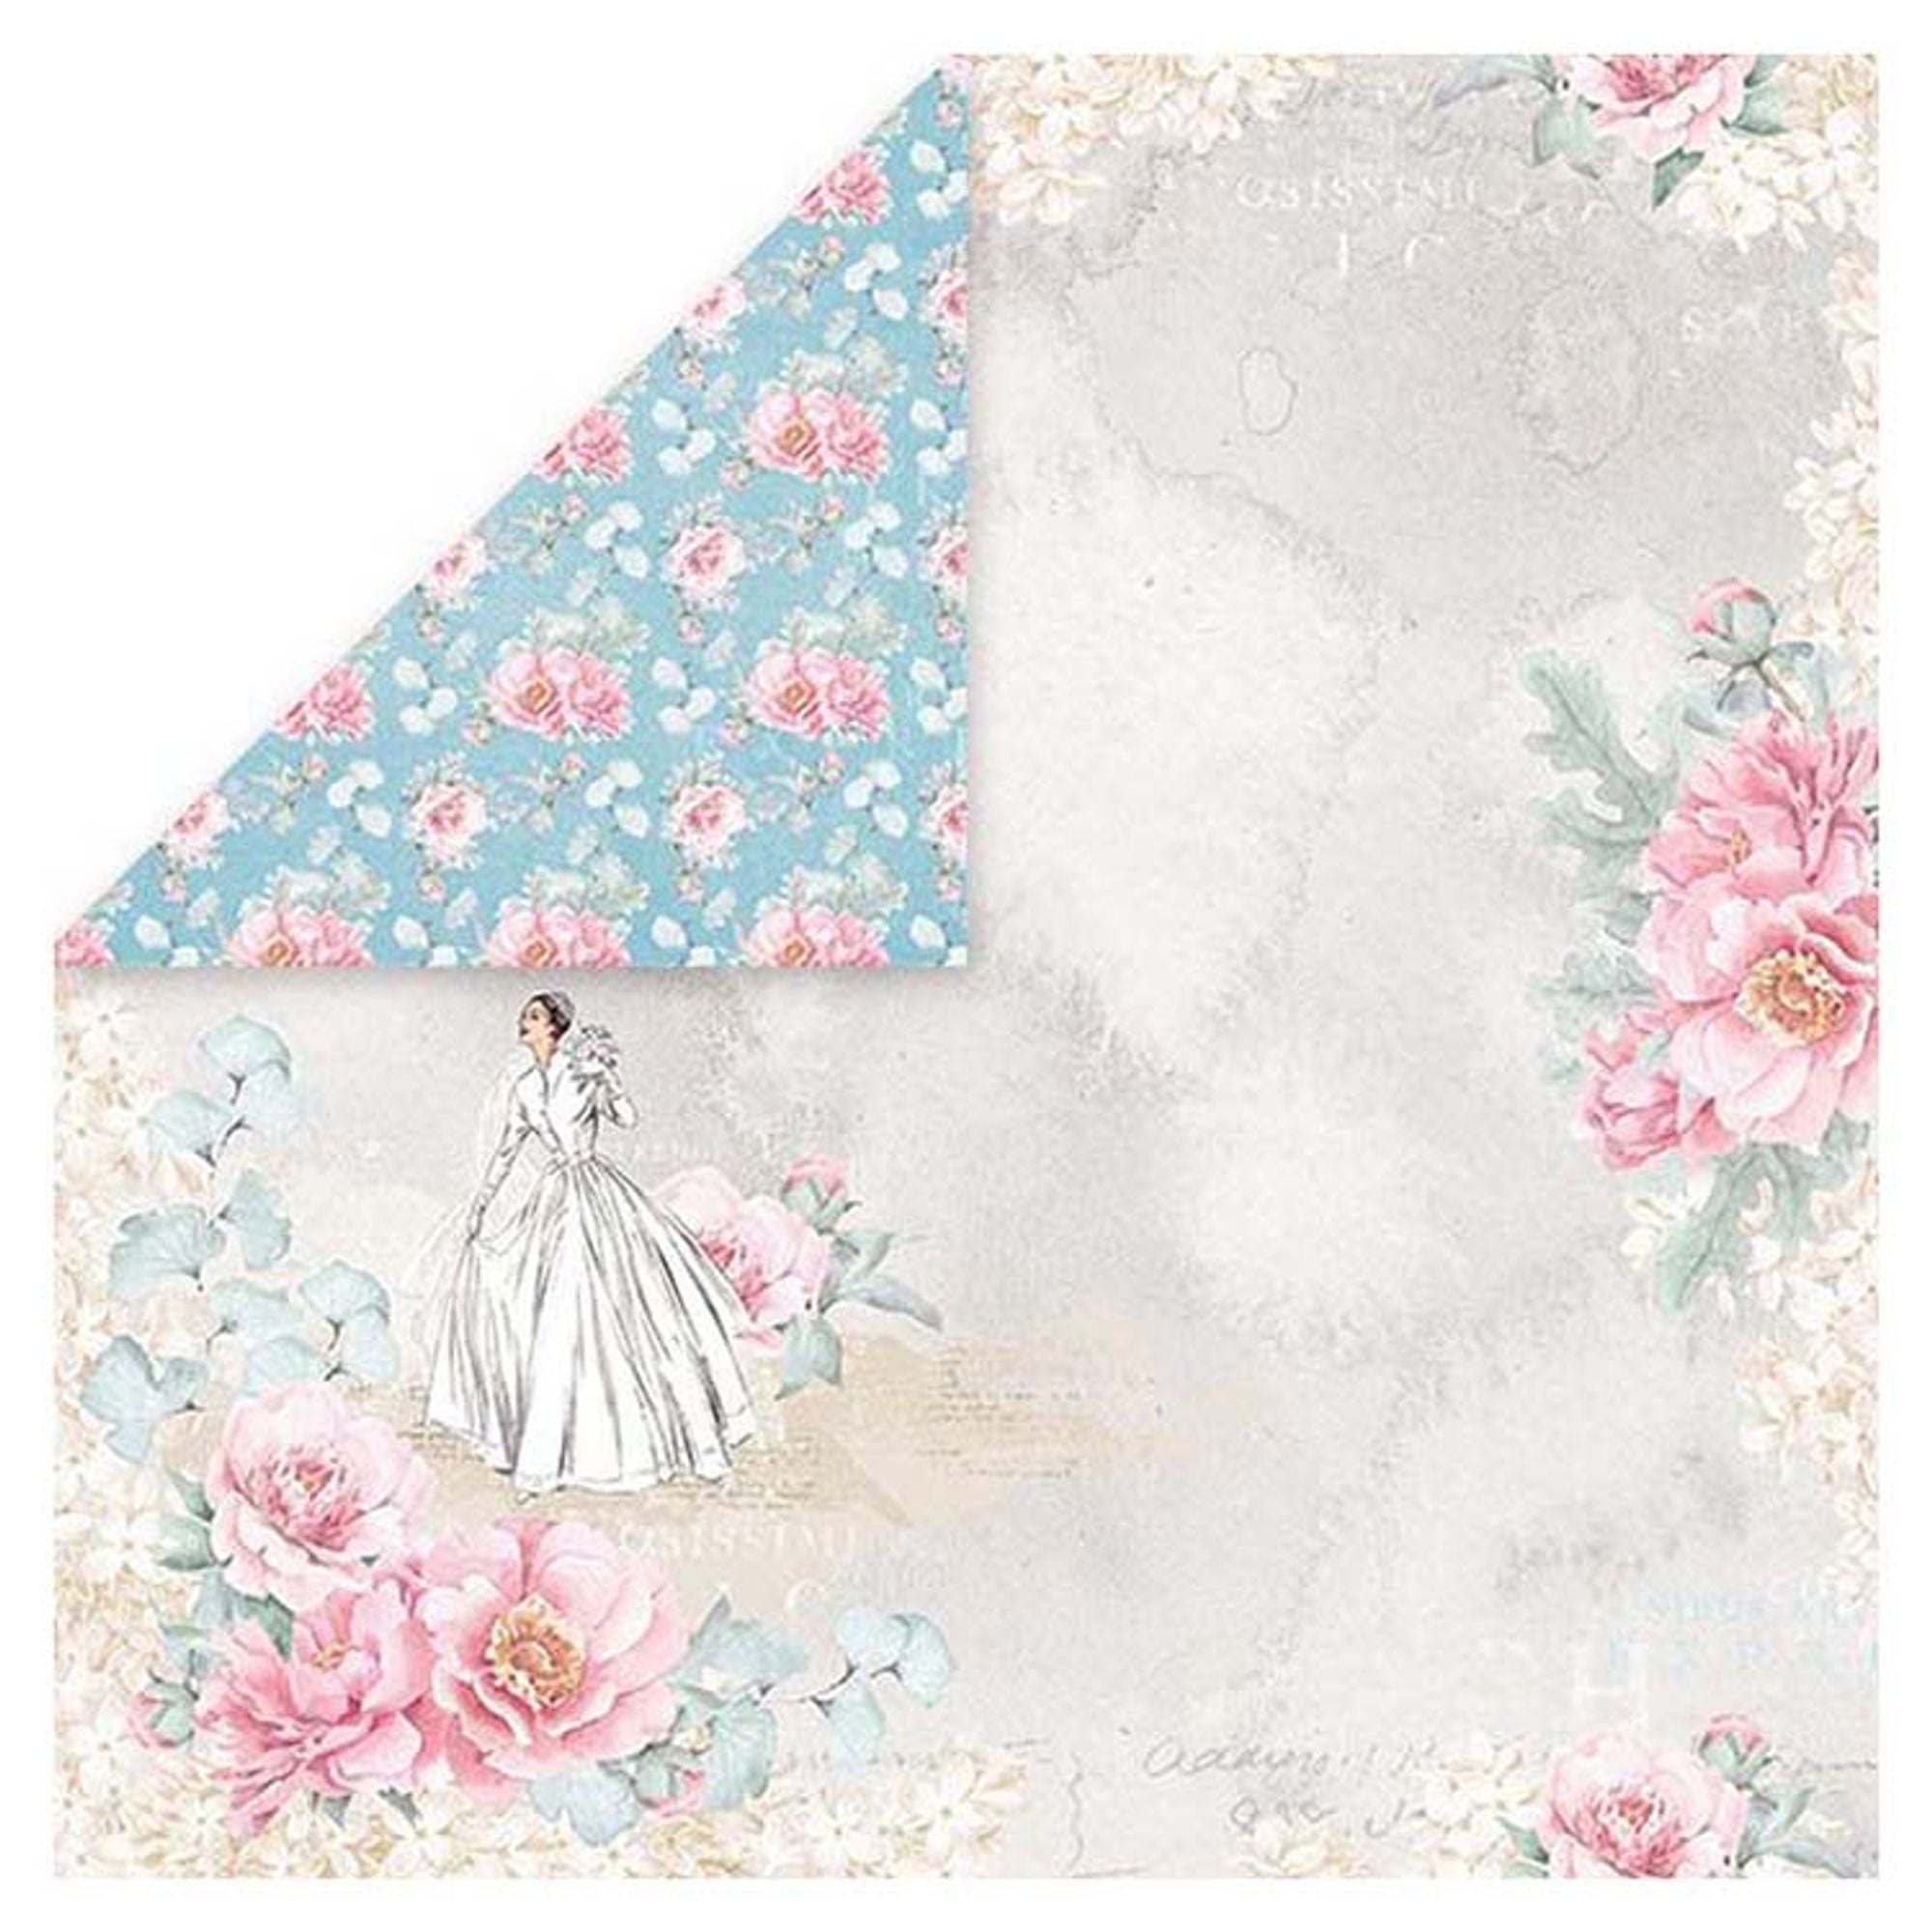 Craft & You Design Pastel Wedding 6x6 Paper Pad